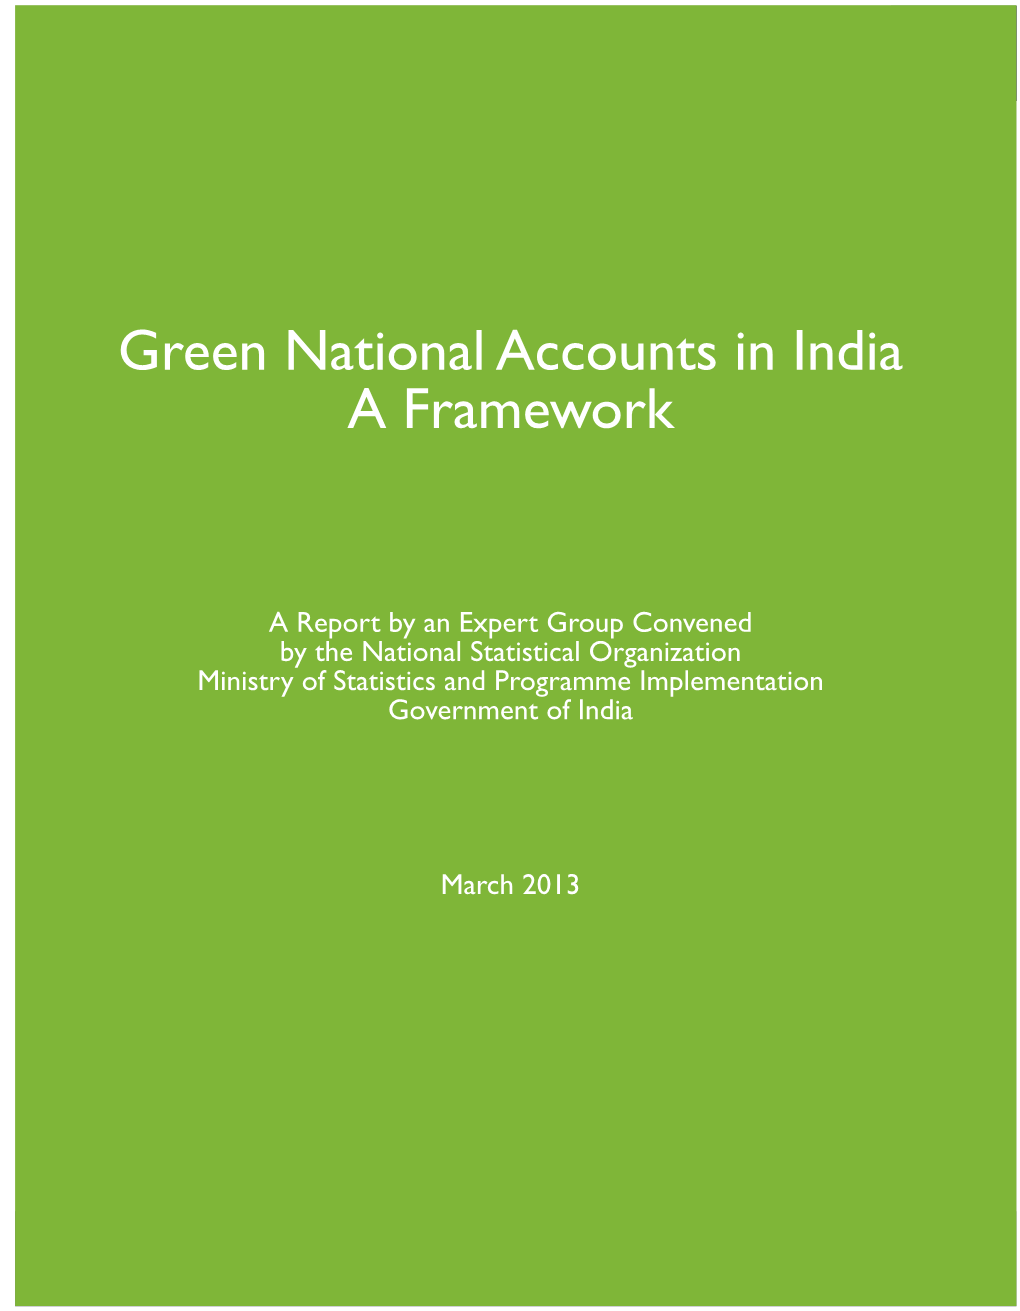 Green National Accounts in India a Framework